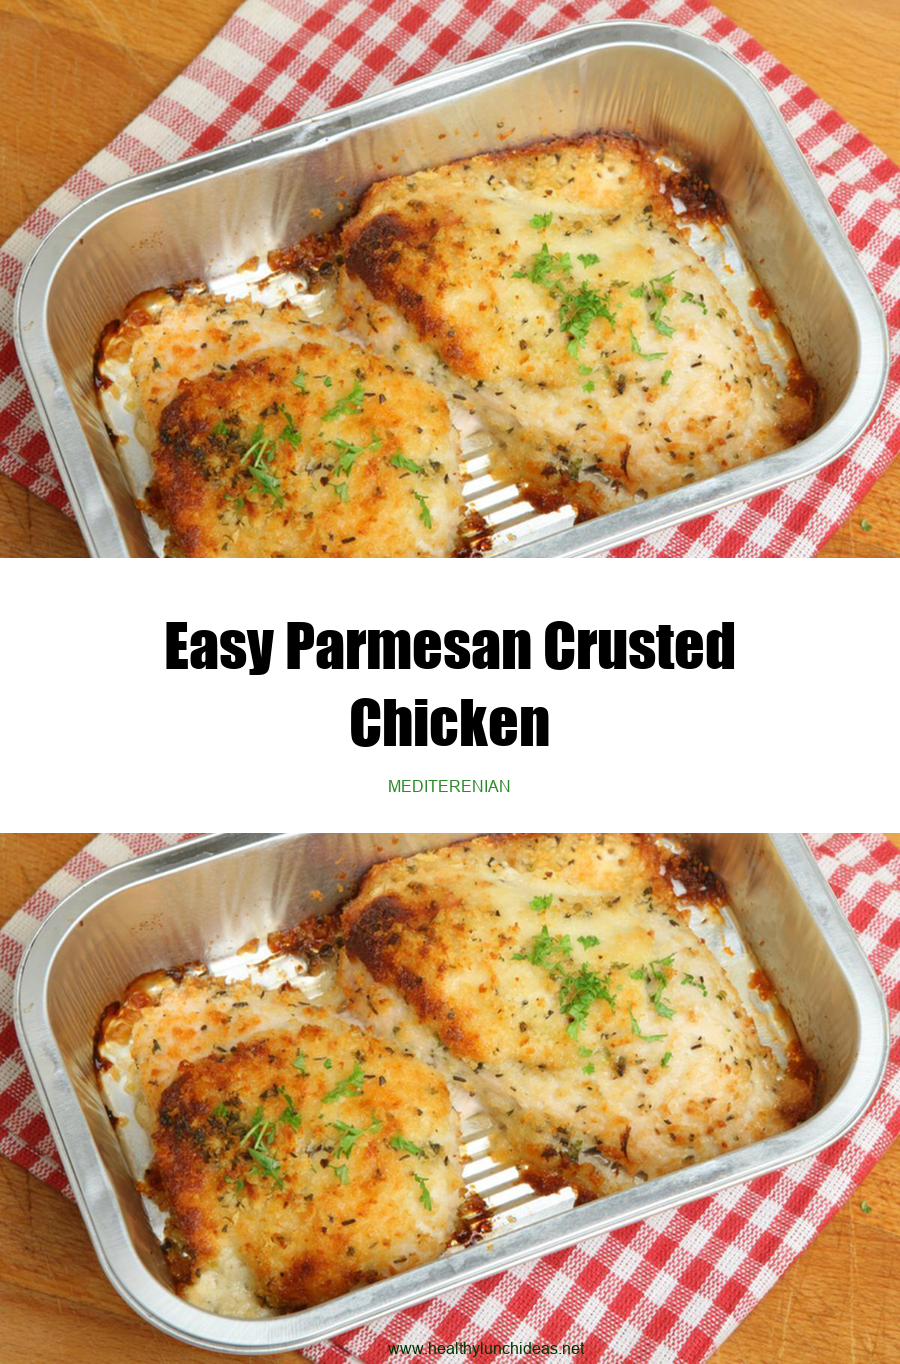 Healthy Recipes: Easy Parmesan Crusted Chicken Recipe